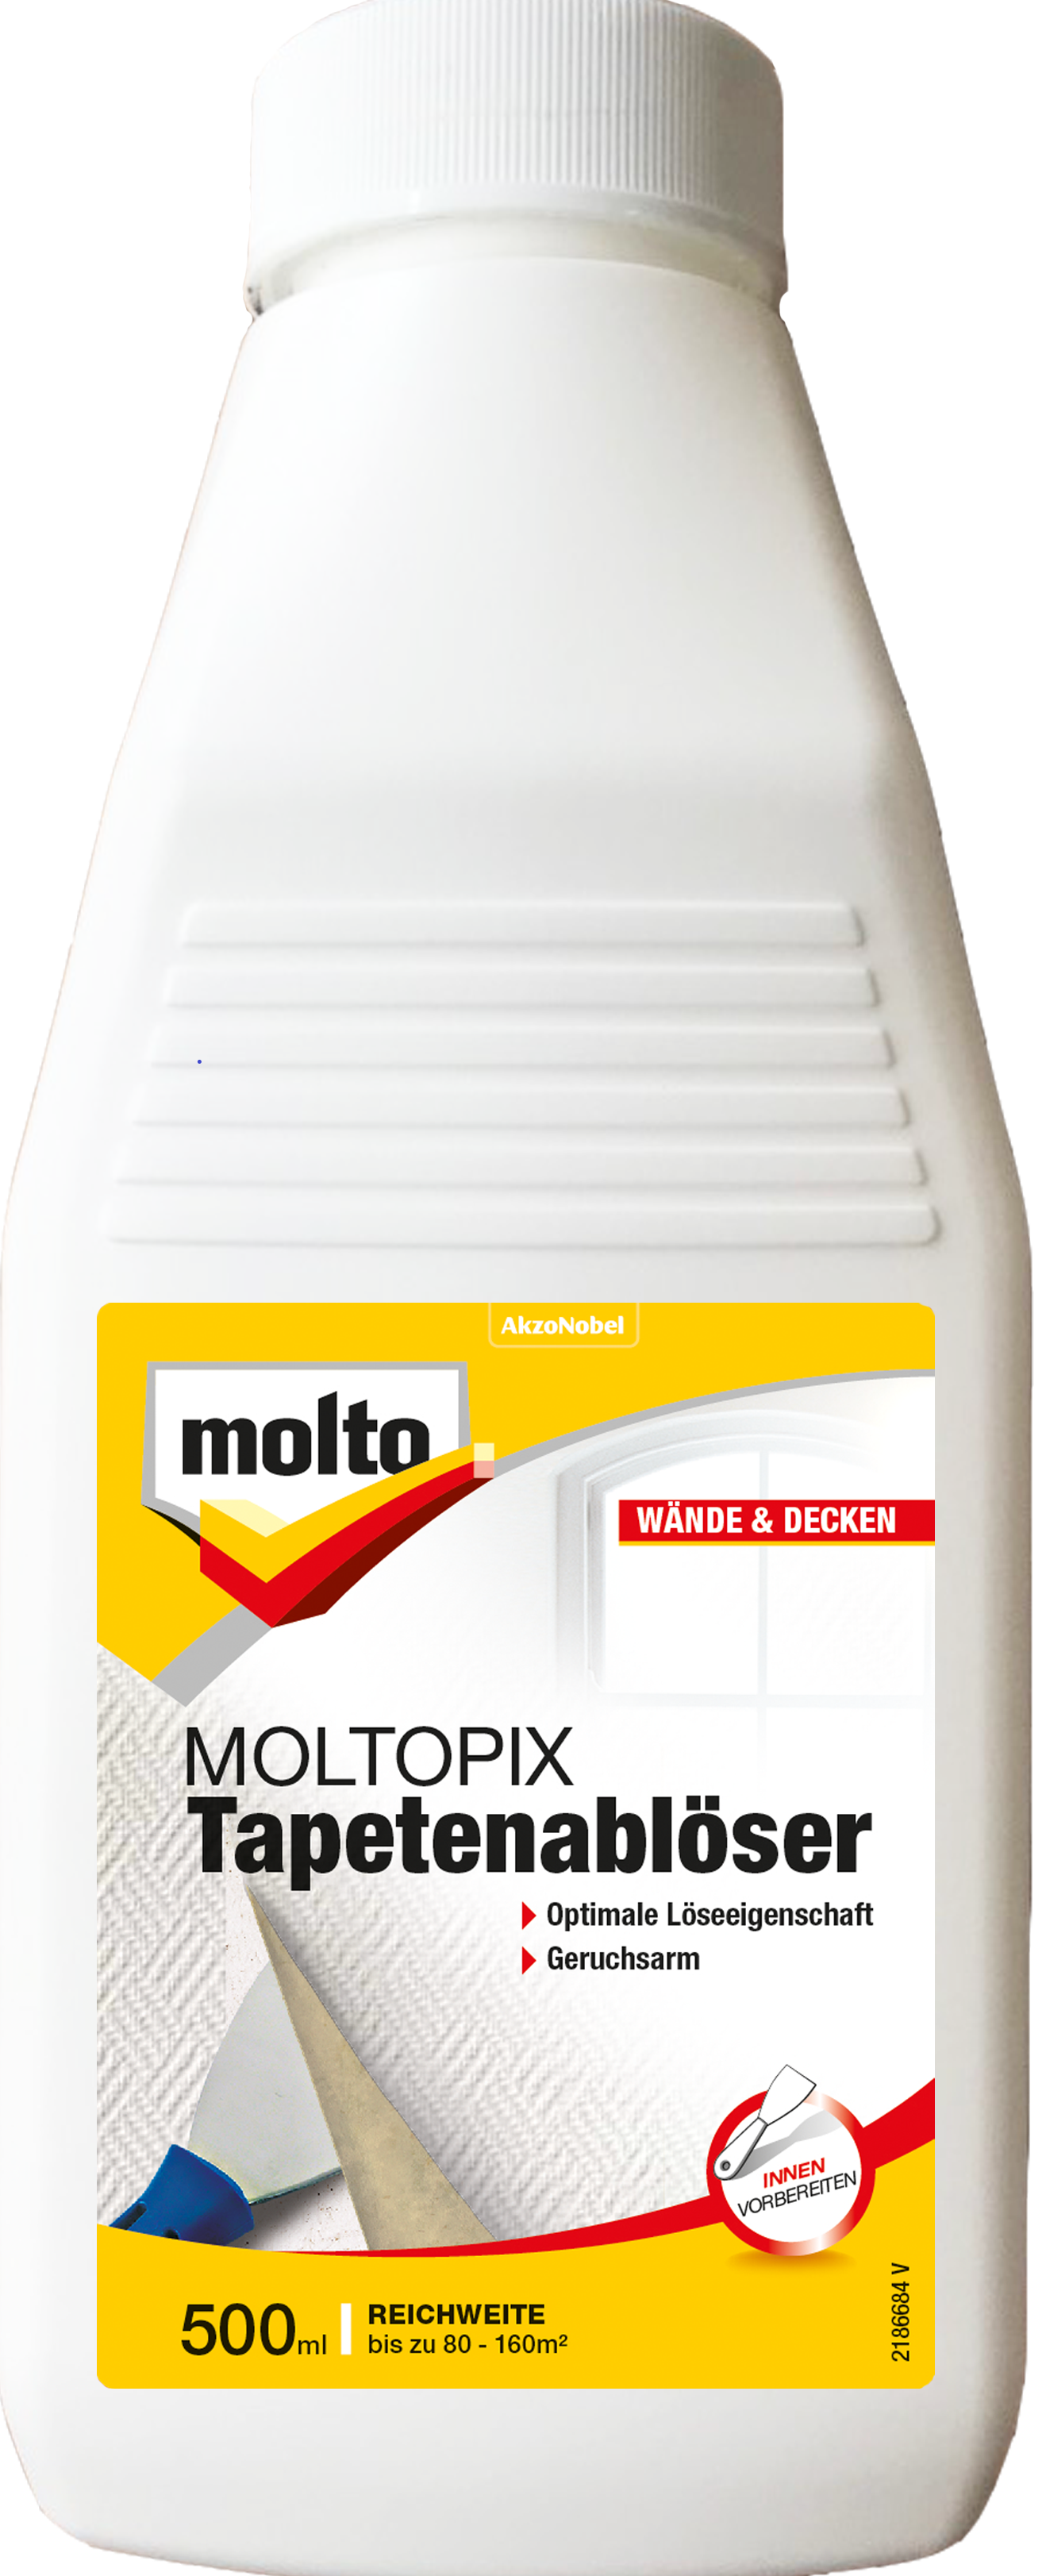 molto Tapetenablöser Moltopix 500 ml